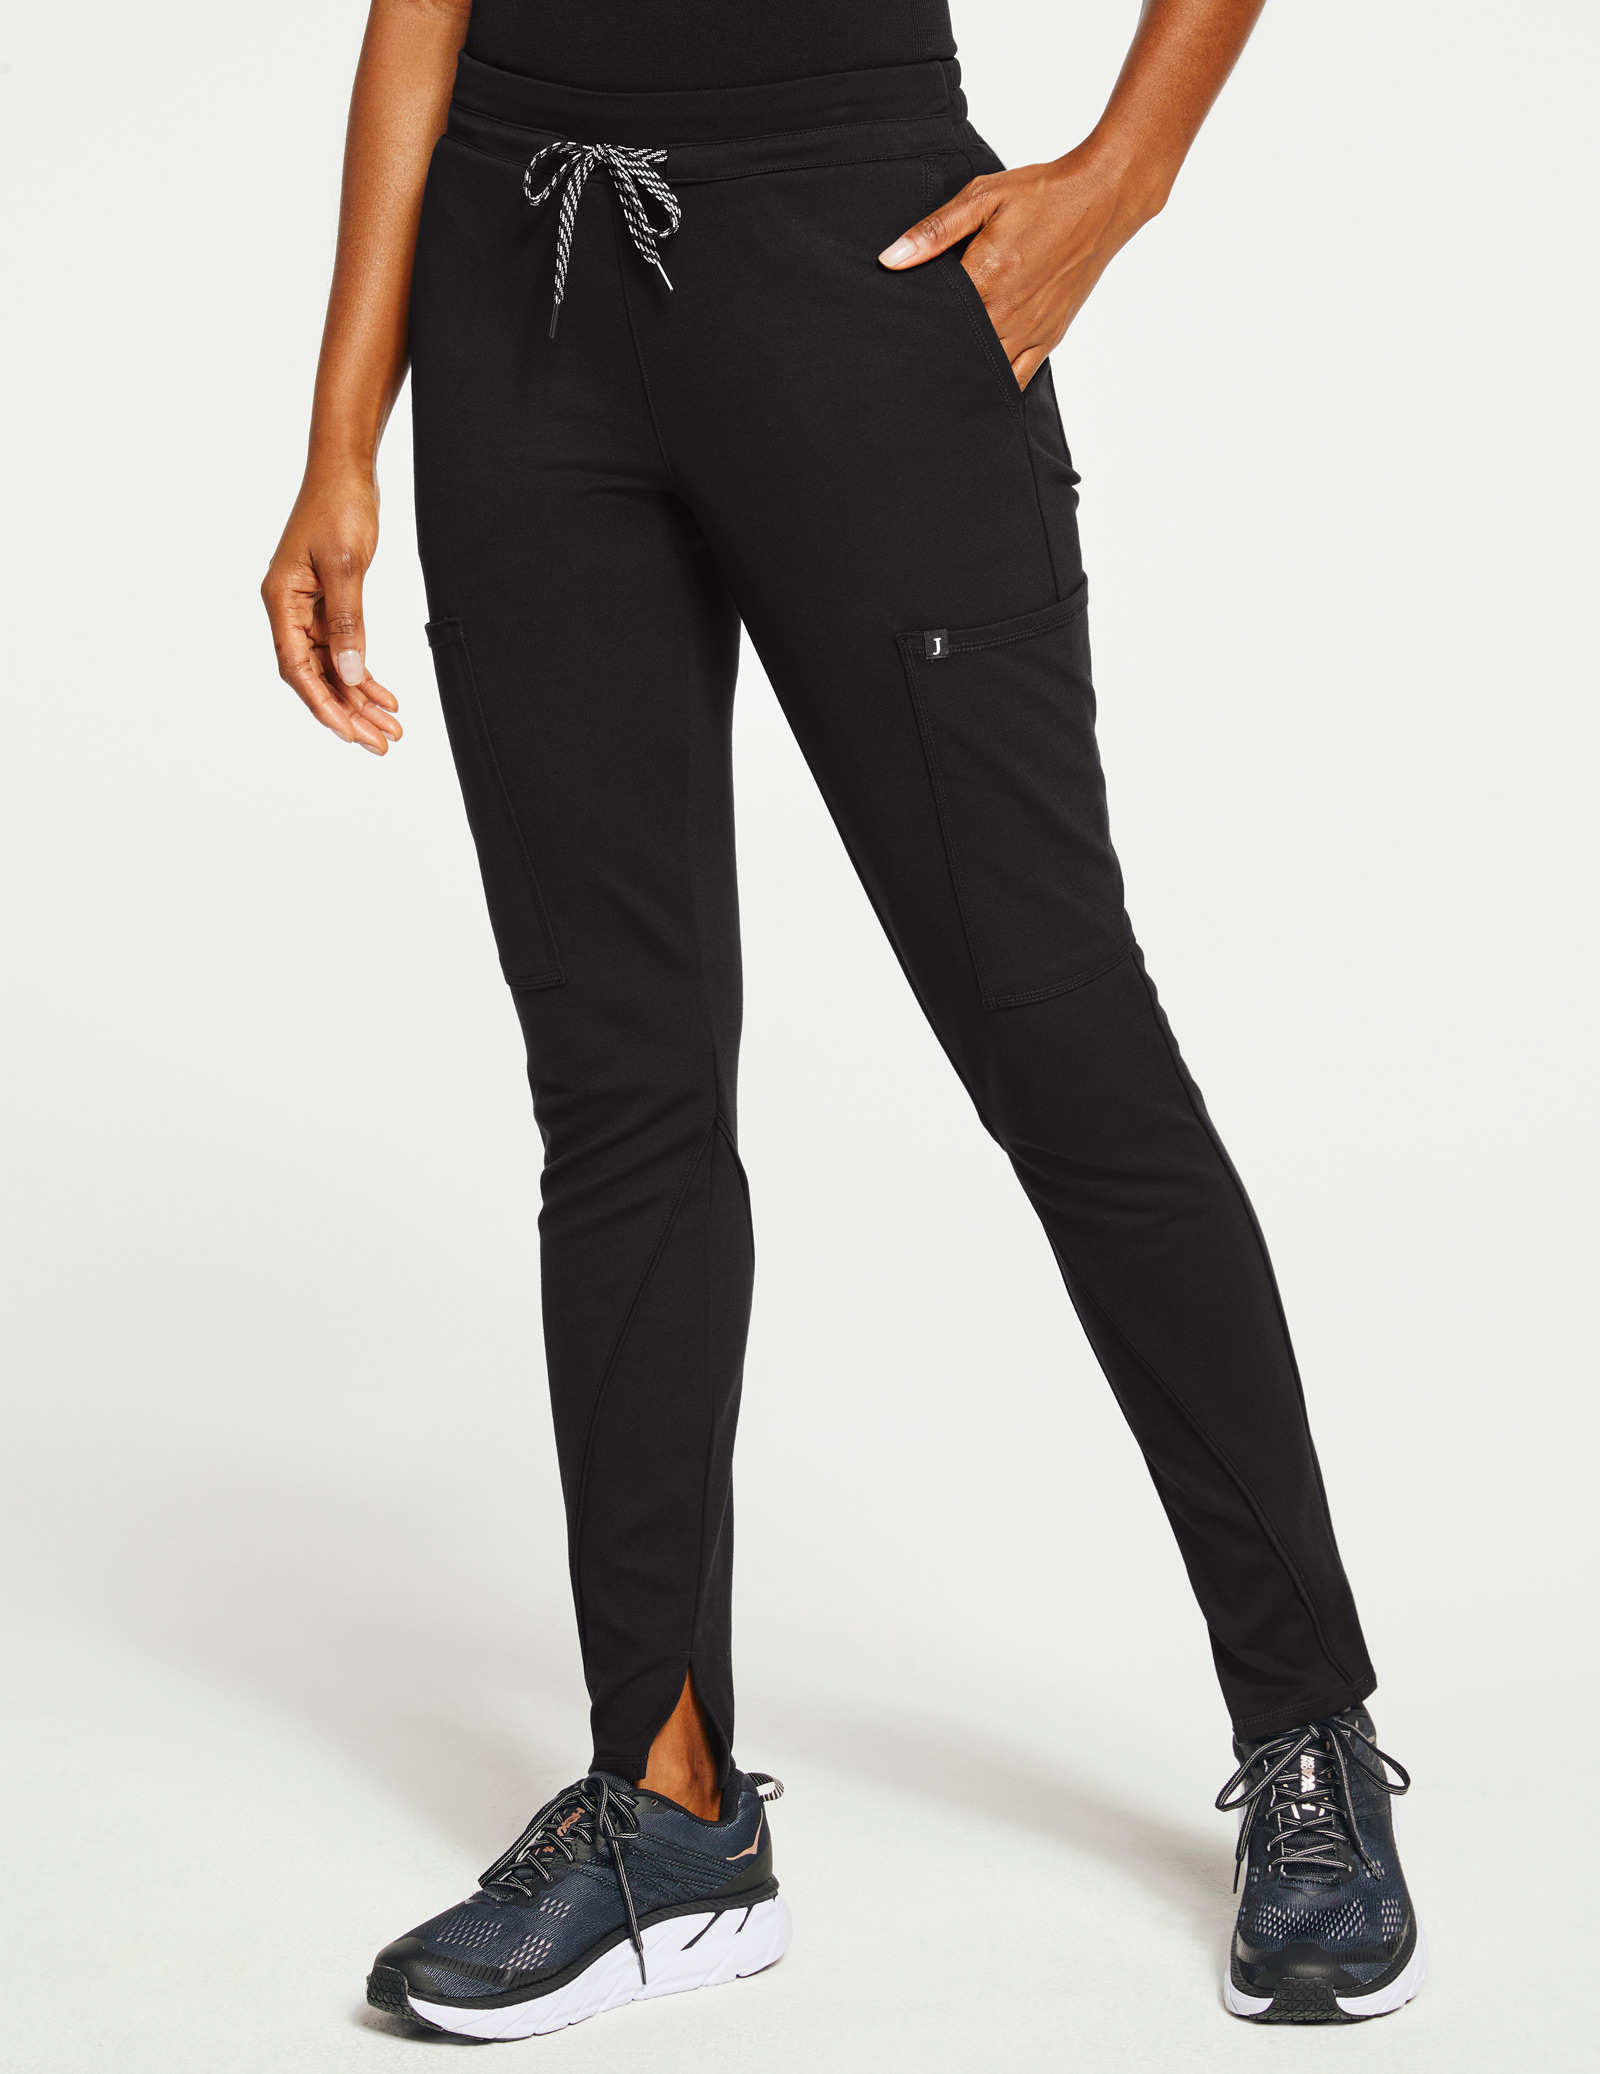 skinny black cargo pants womens